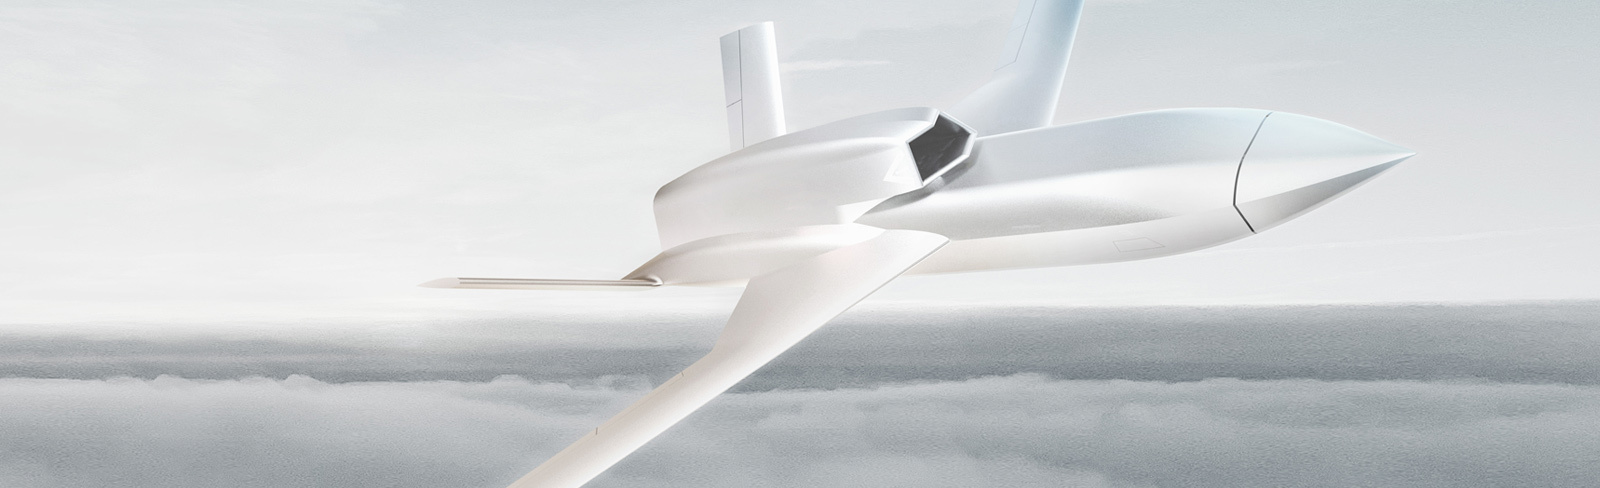 CGI of UAS Concepts in flight